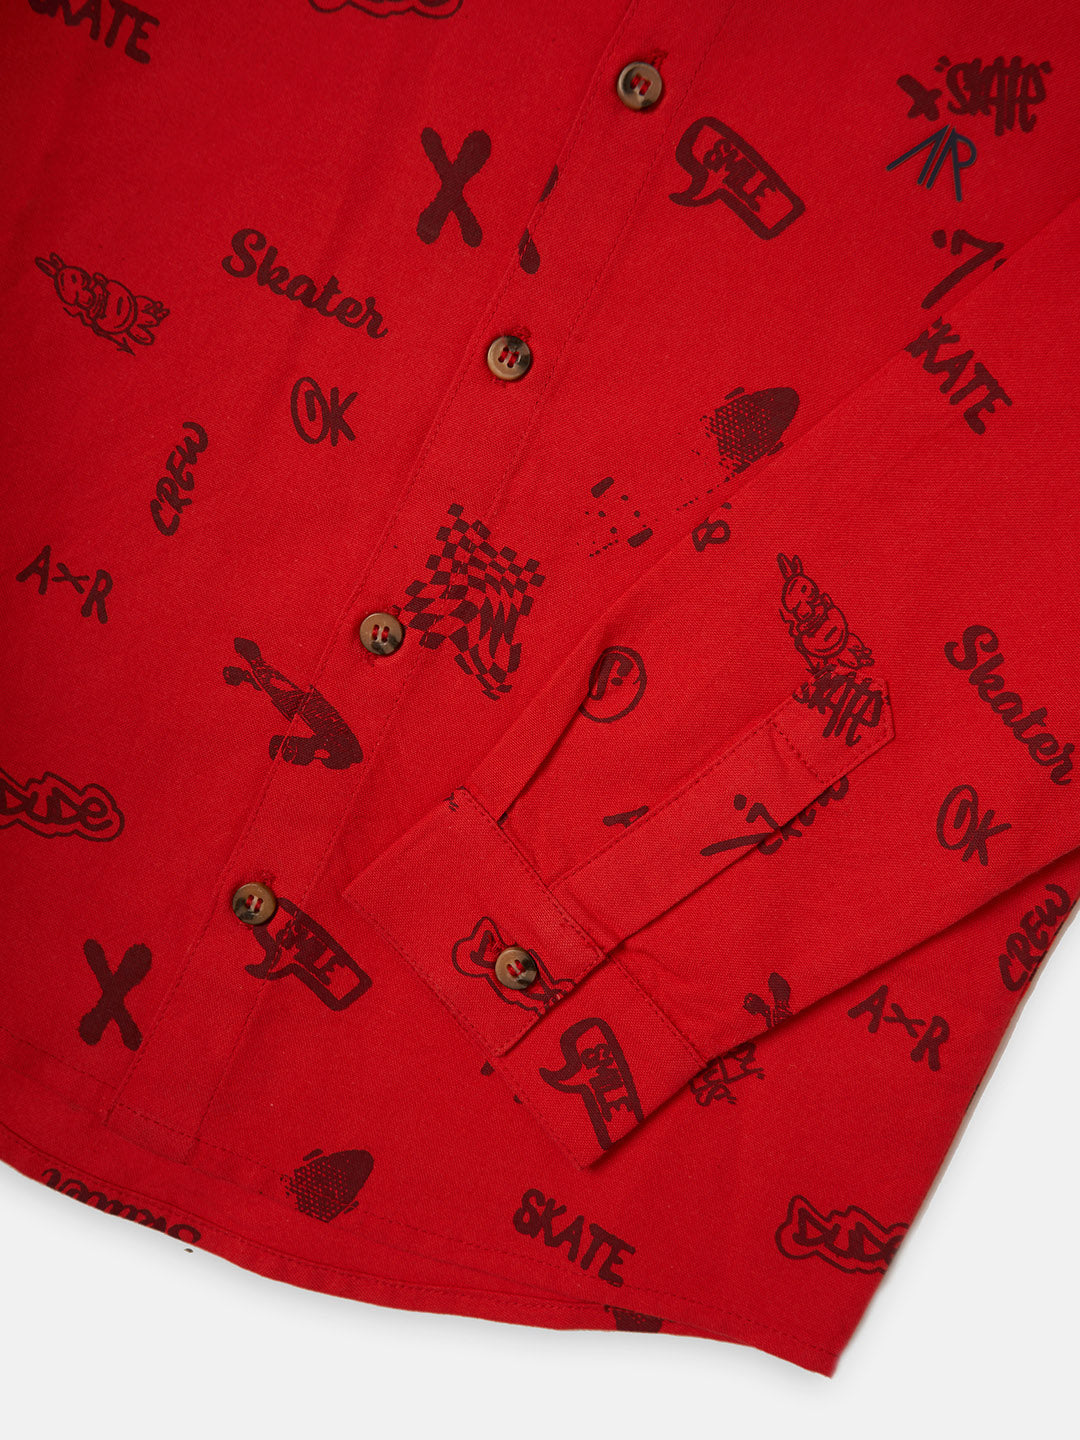 Boys Skater Printed Full Sleeves Cotton Red Smart Shirt